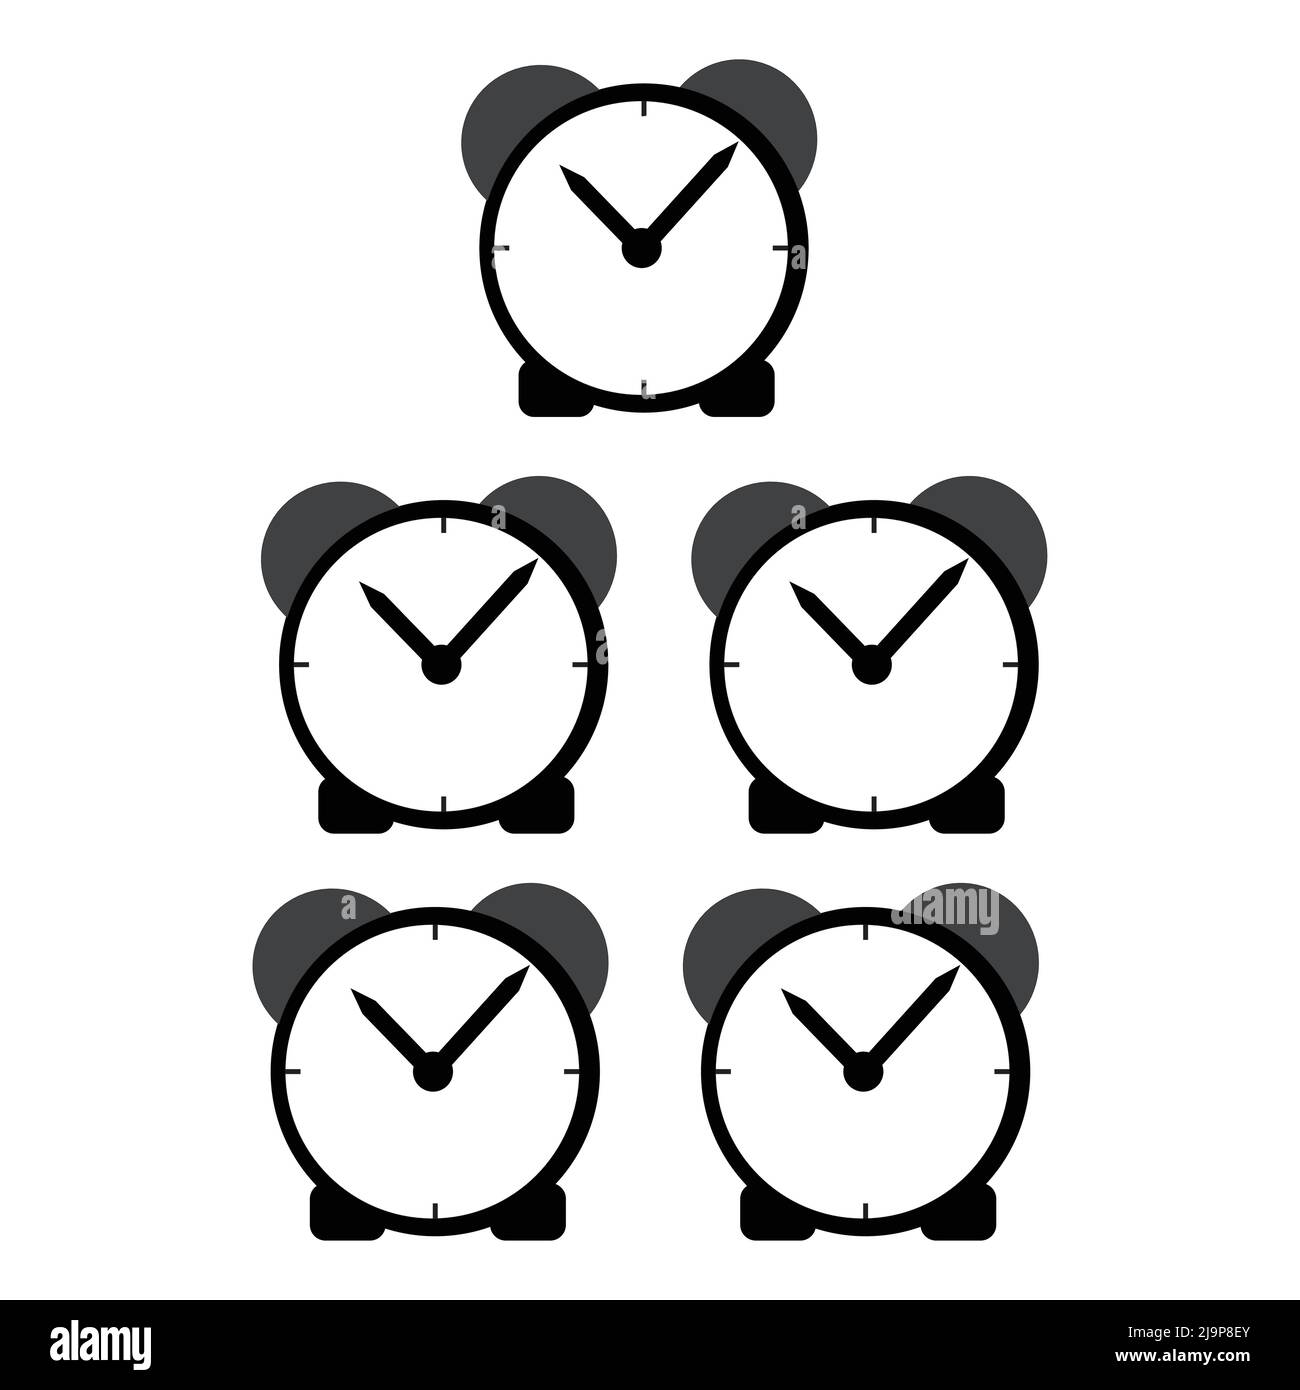 five alarm clock. on white background Stock Vector